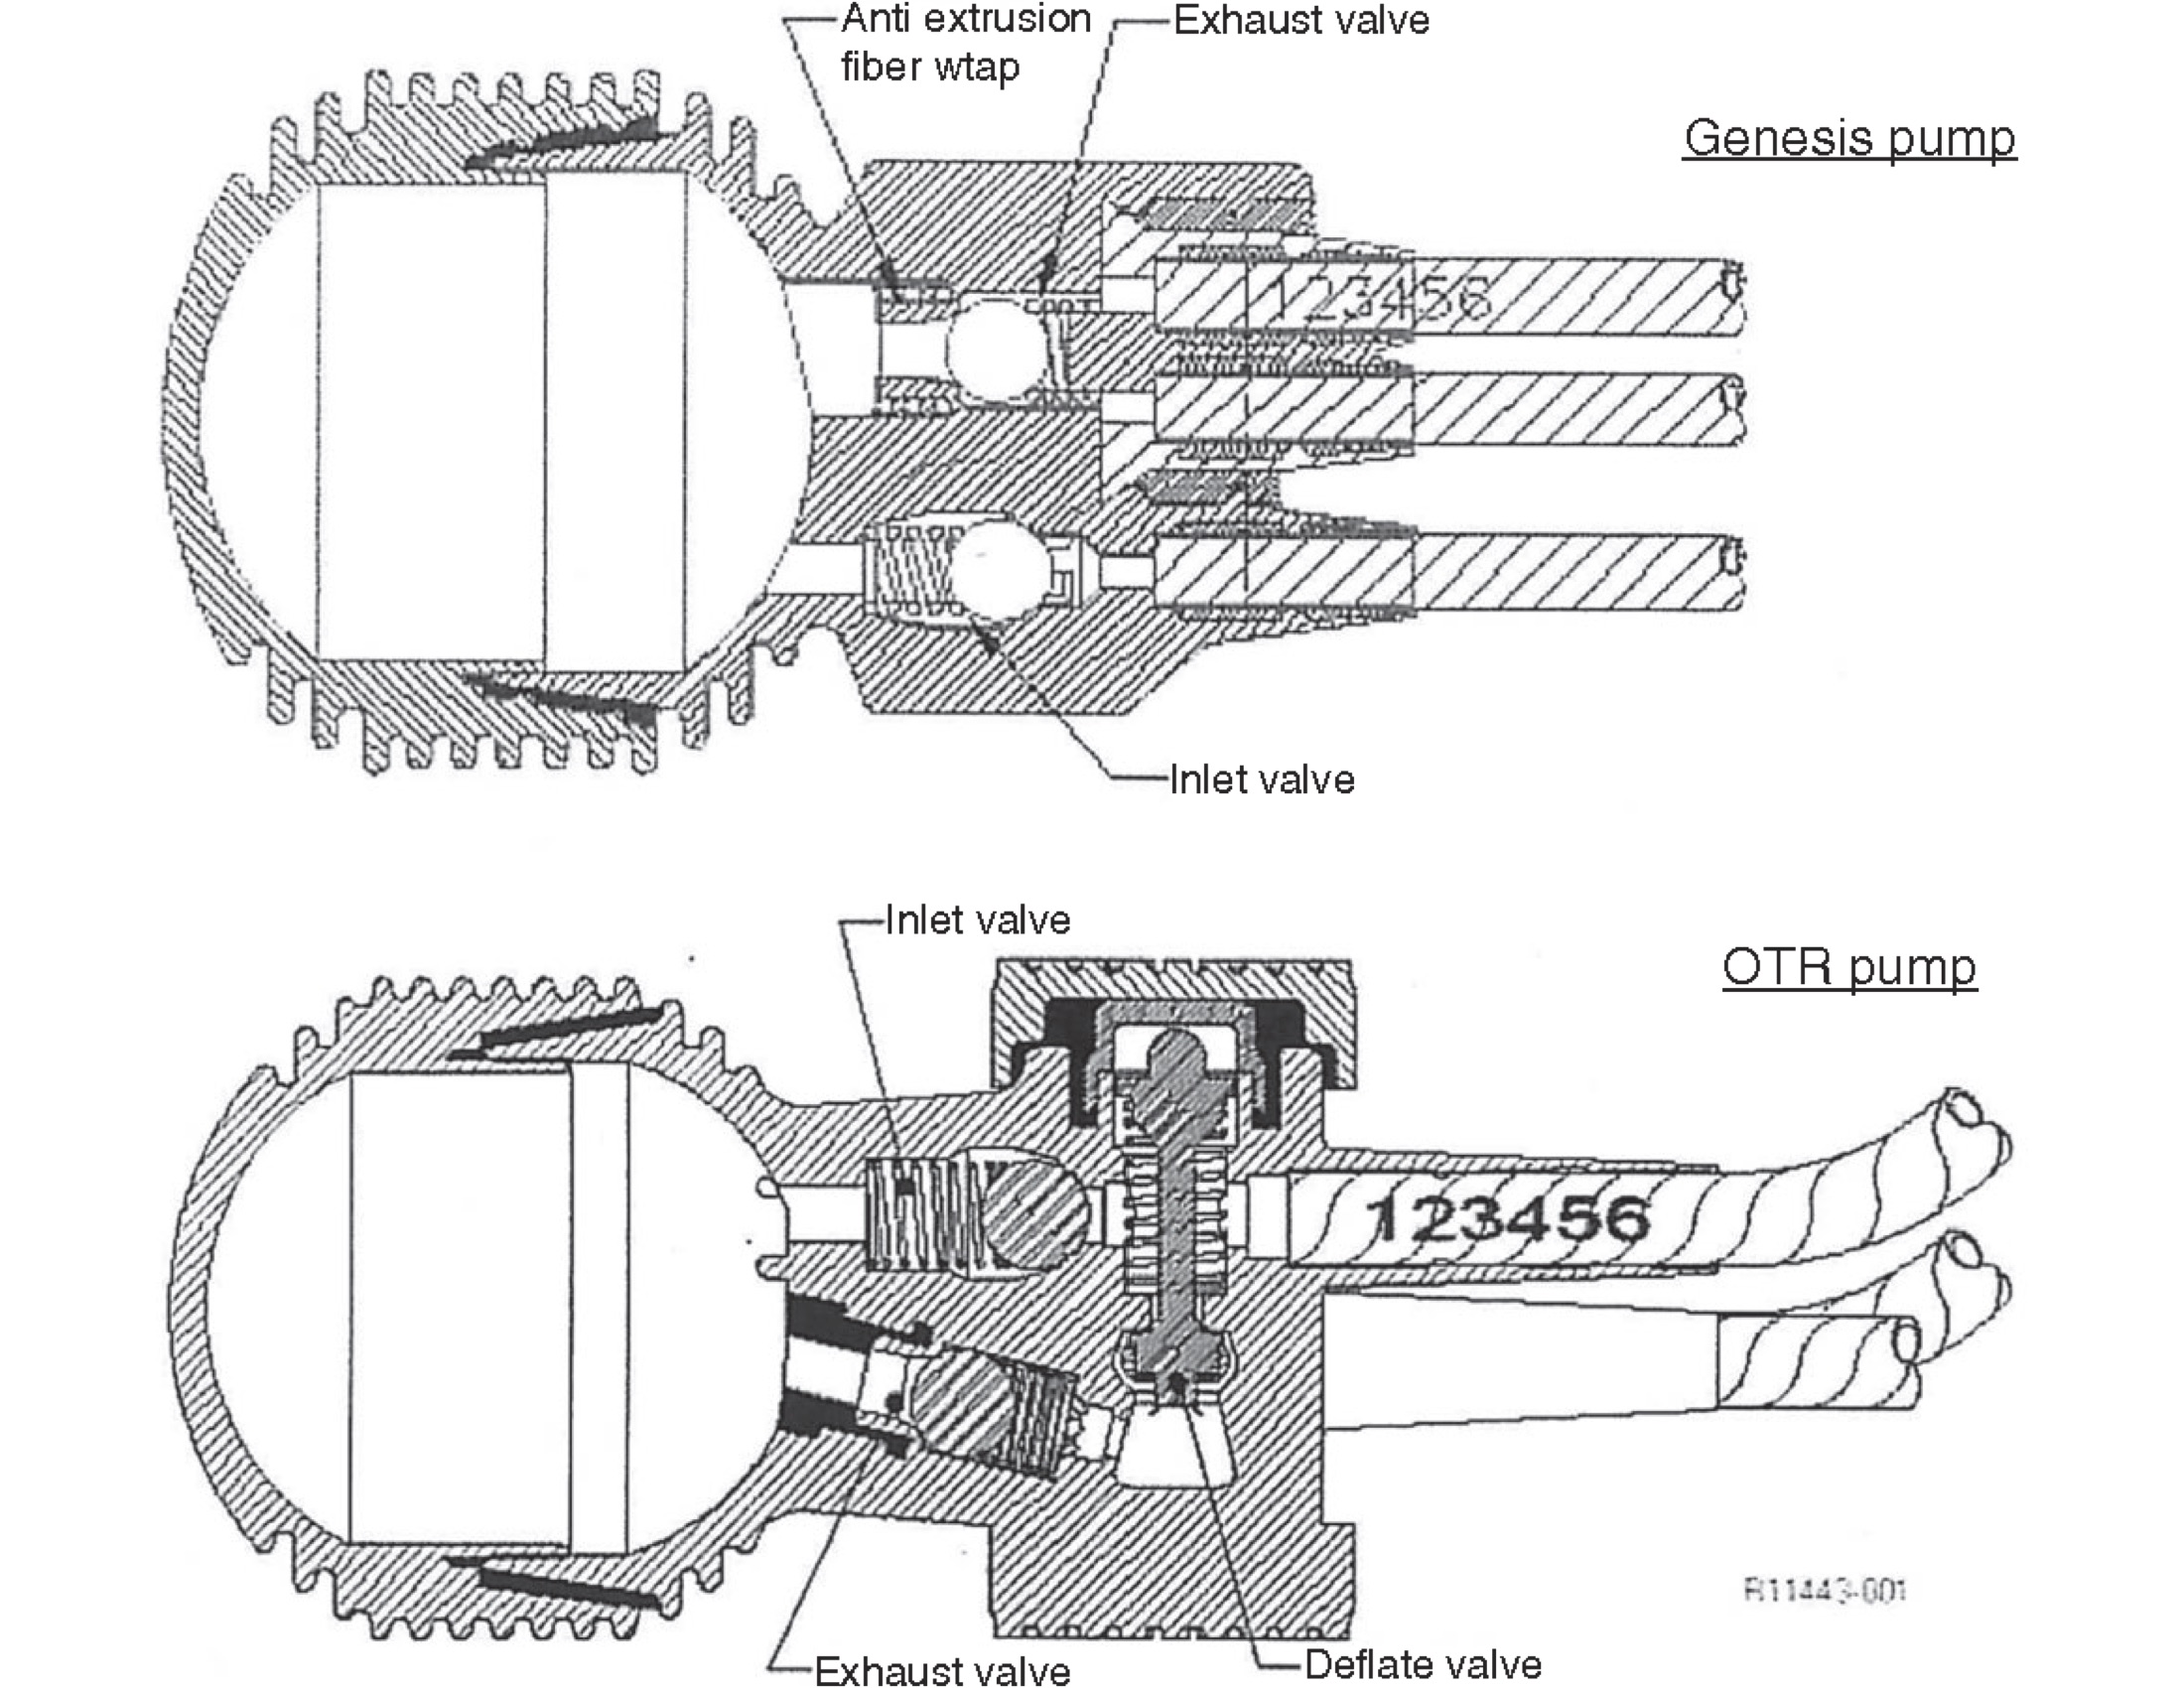 pump. schematic otr versus genesis coloplast.jpg